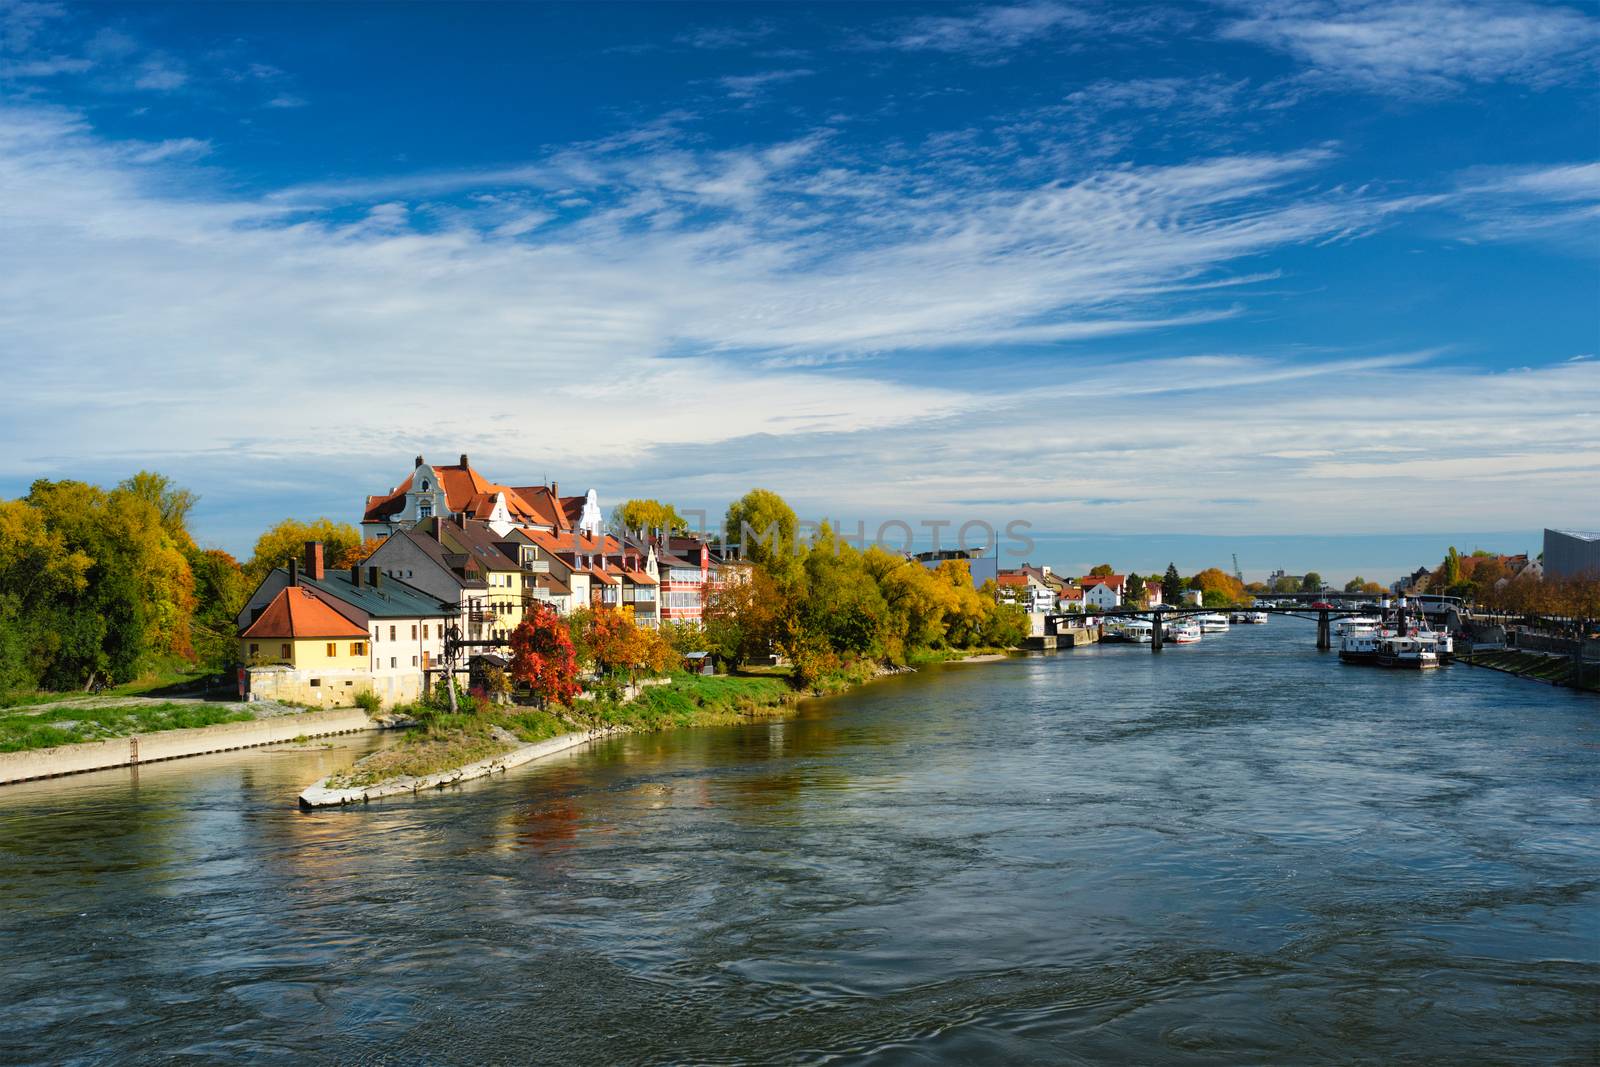 Houses along Danube River. Regensburg, Bavaria, Germany by dimol